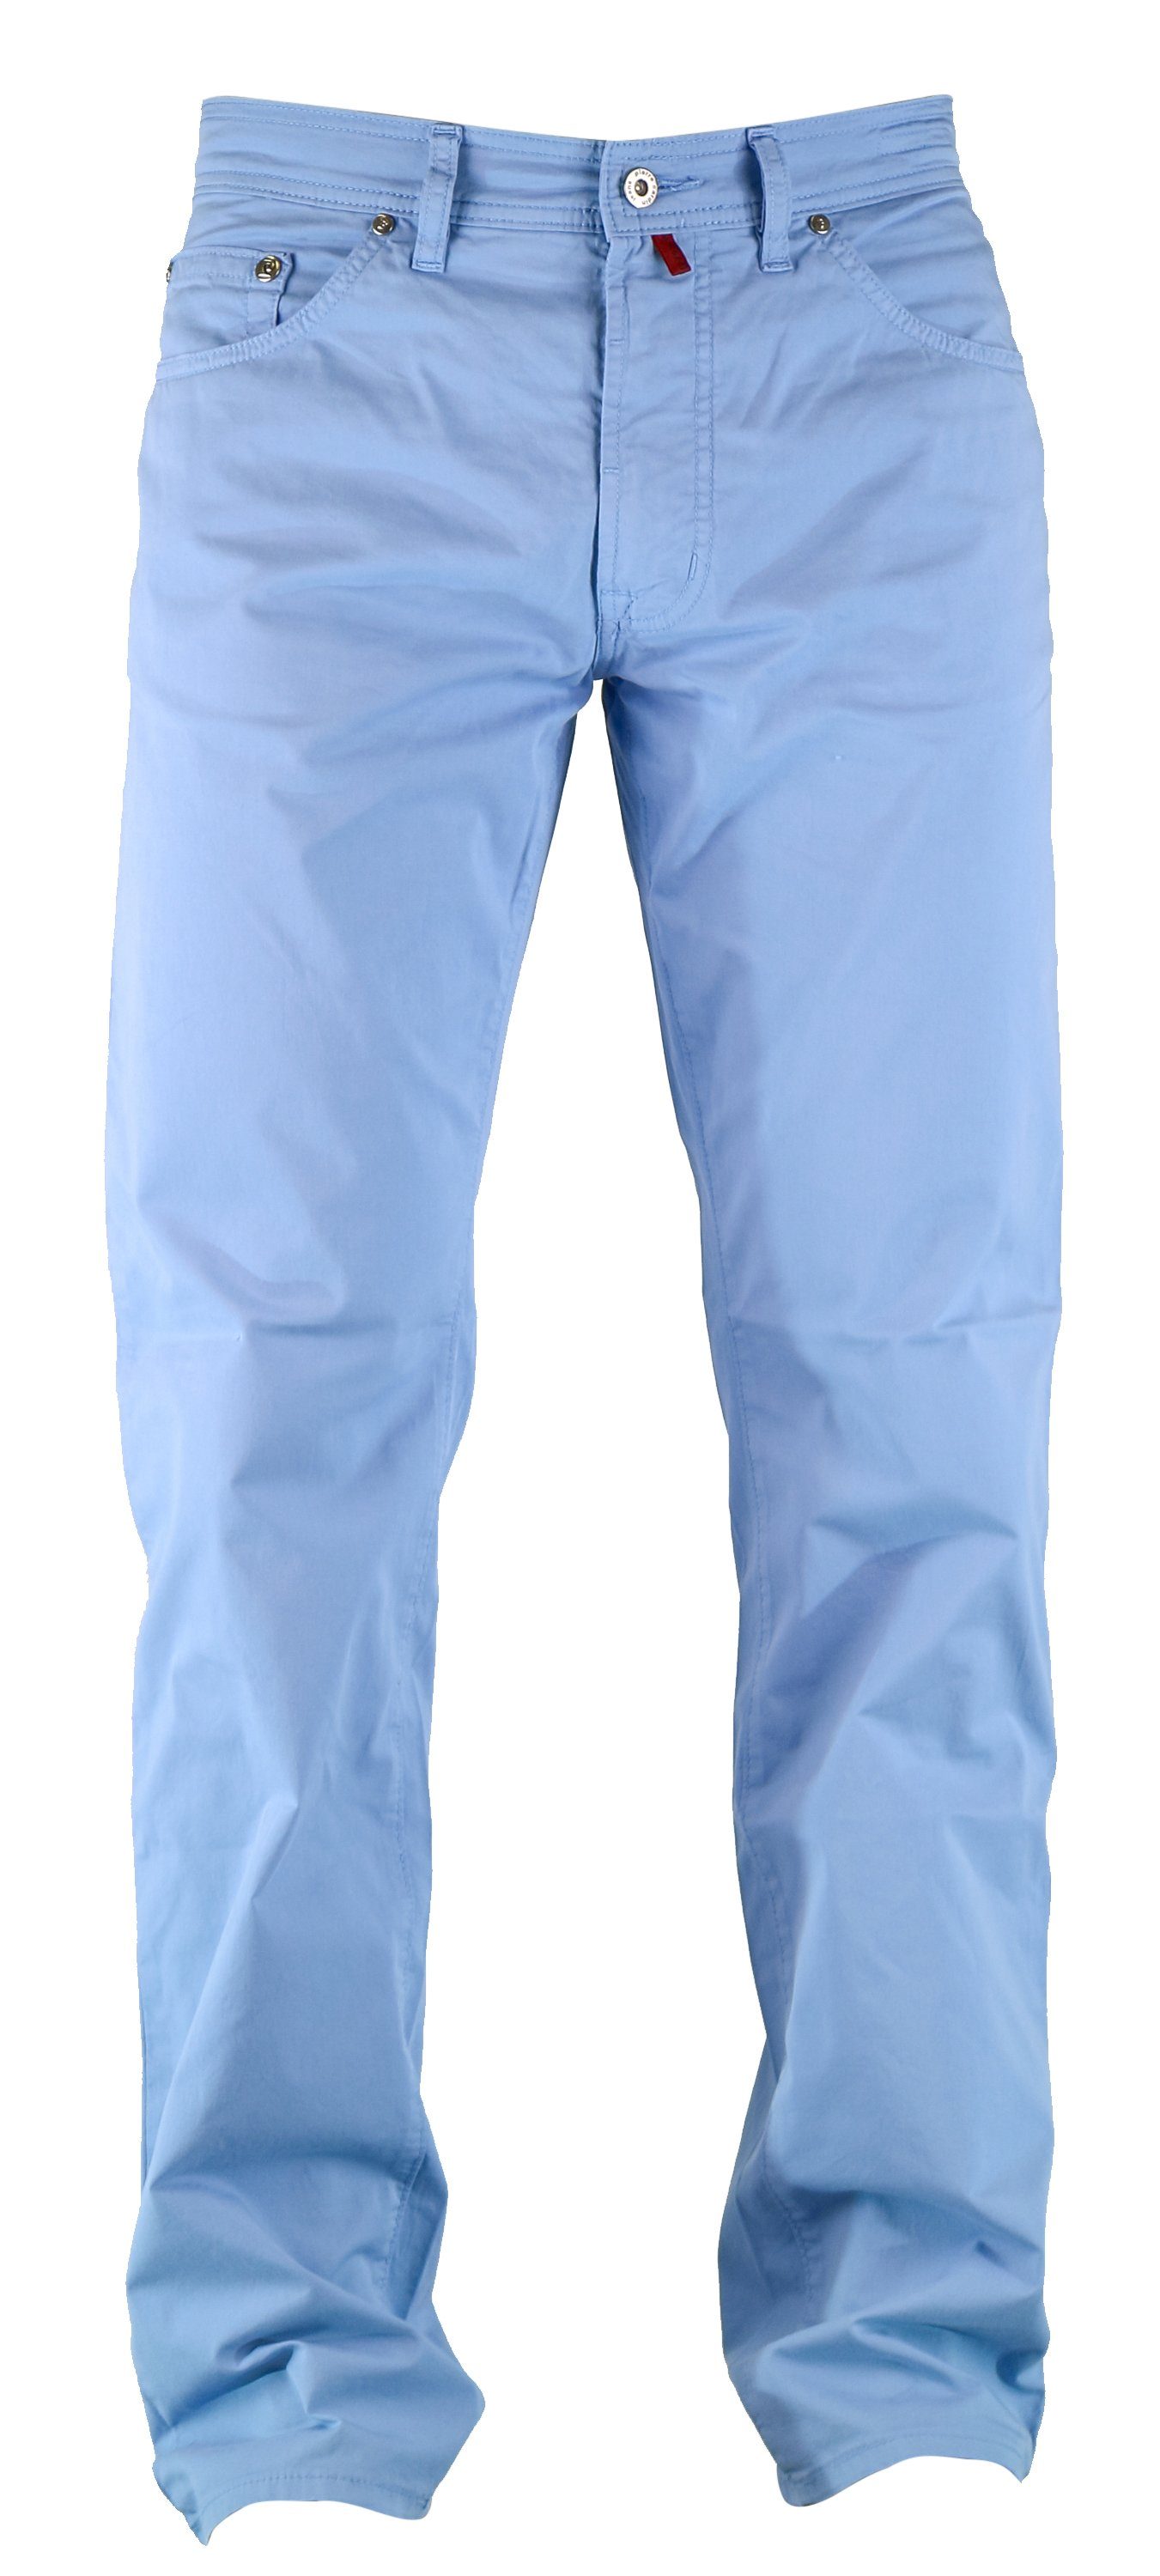 Pierre Cardin 5-Pocket-Jeans PIERRE CARDIN DEAUVILLE summer air touch blue 3196 2021.65 | Straight-Fit Jeans